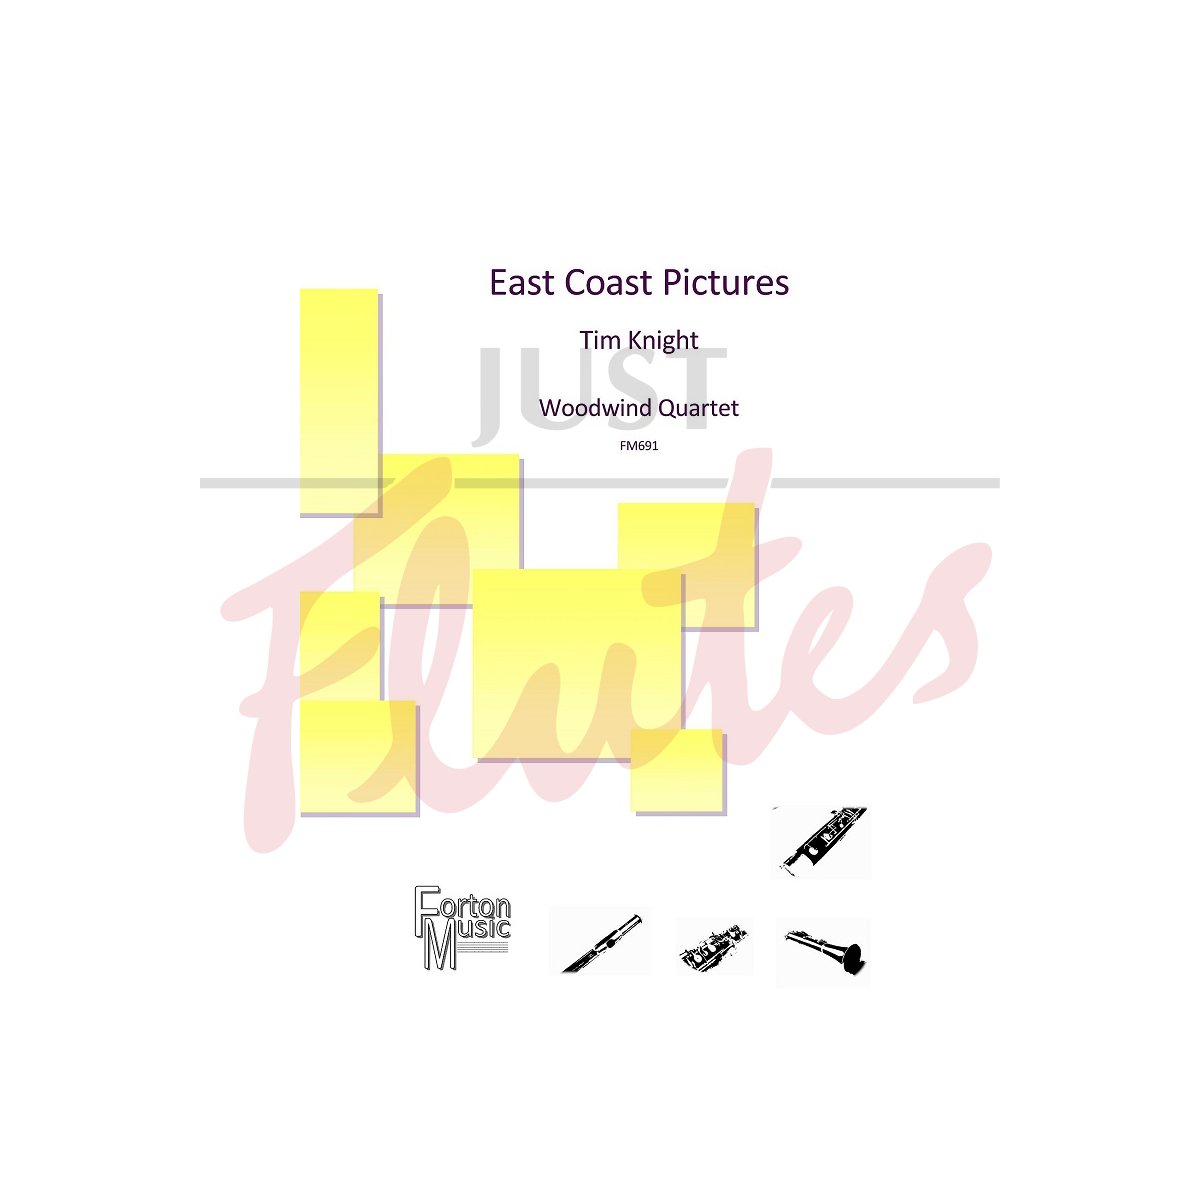 East Coast Pictures for Woodwind Quartet